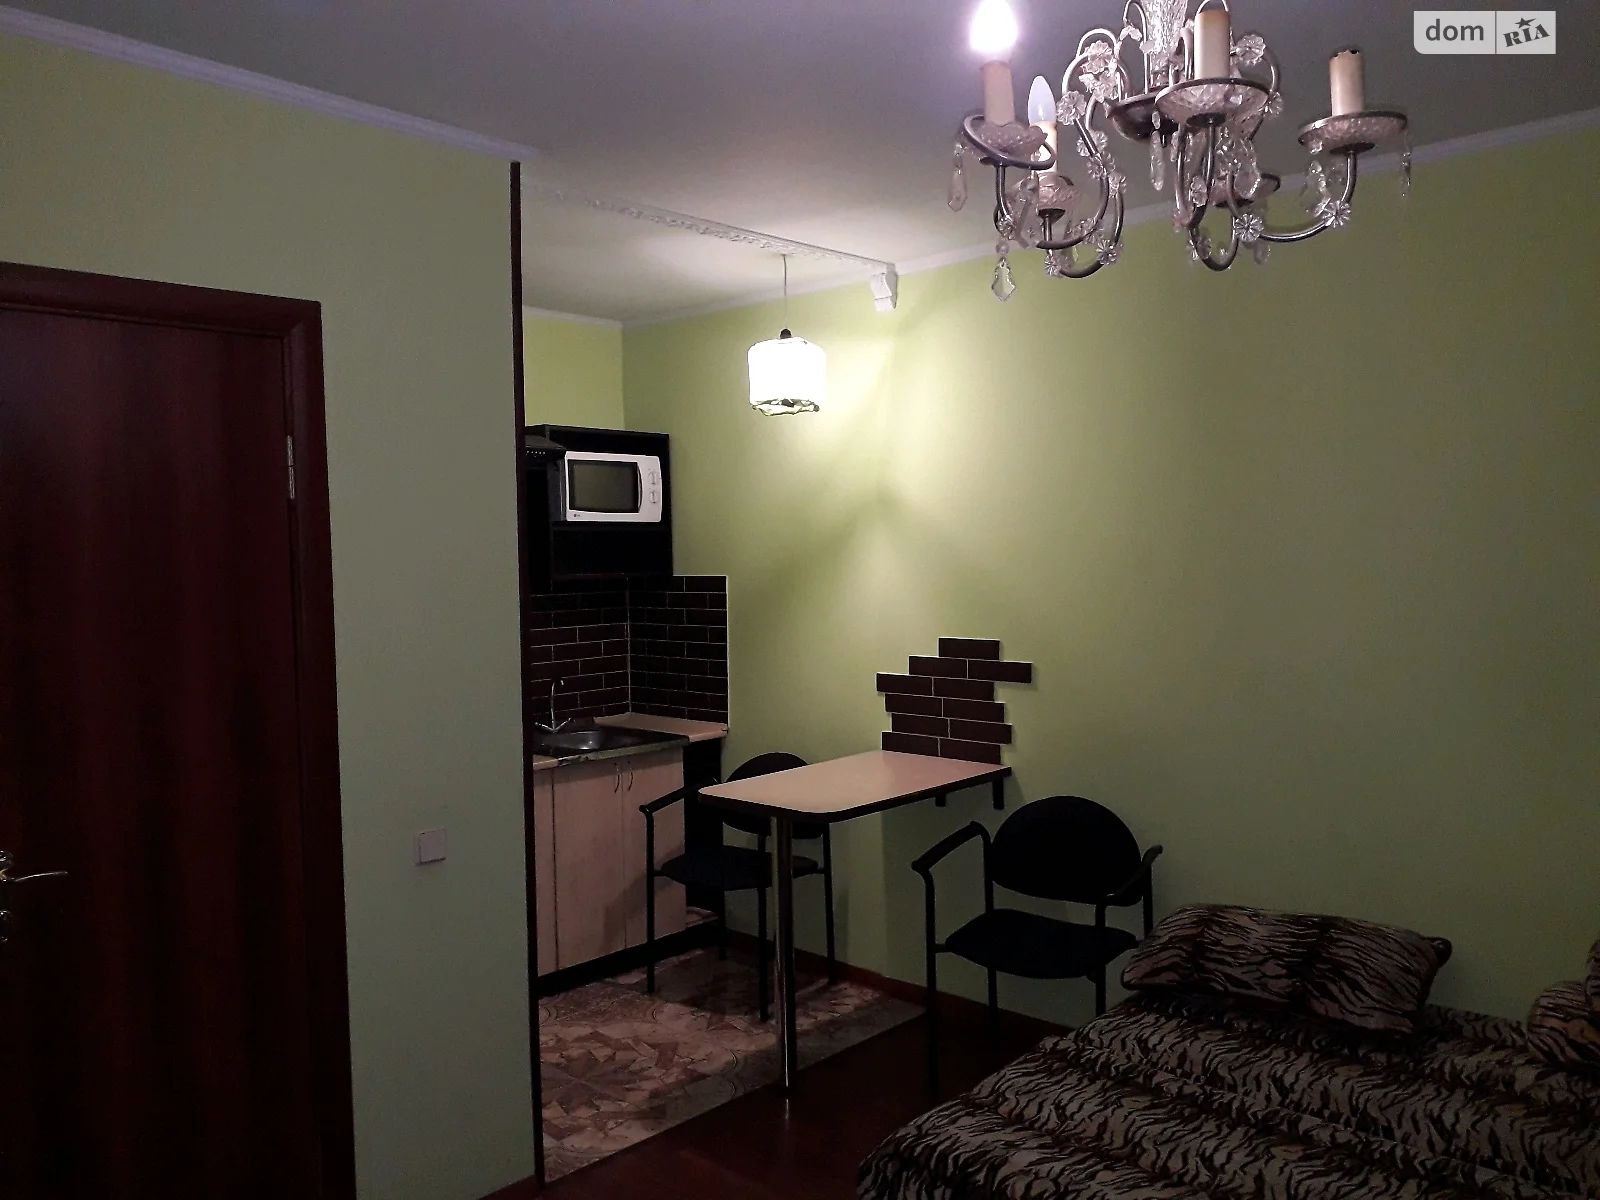 1-кімнатна квартира у Тернополі, цена: 6000 грн - фото 1